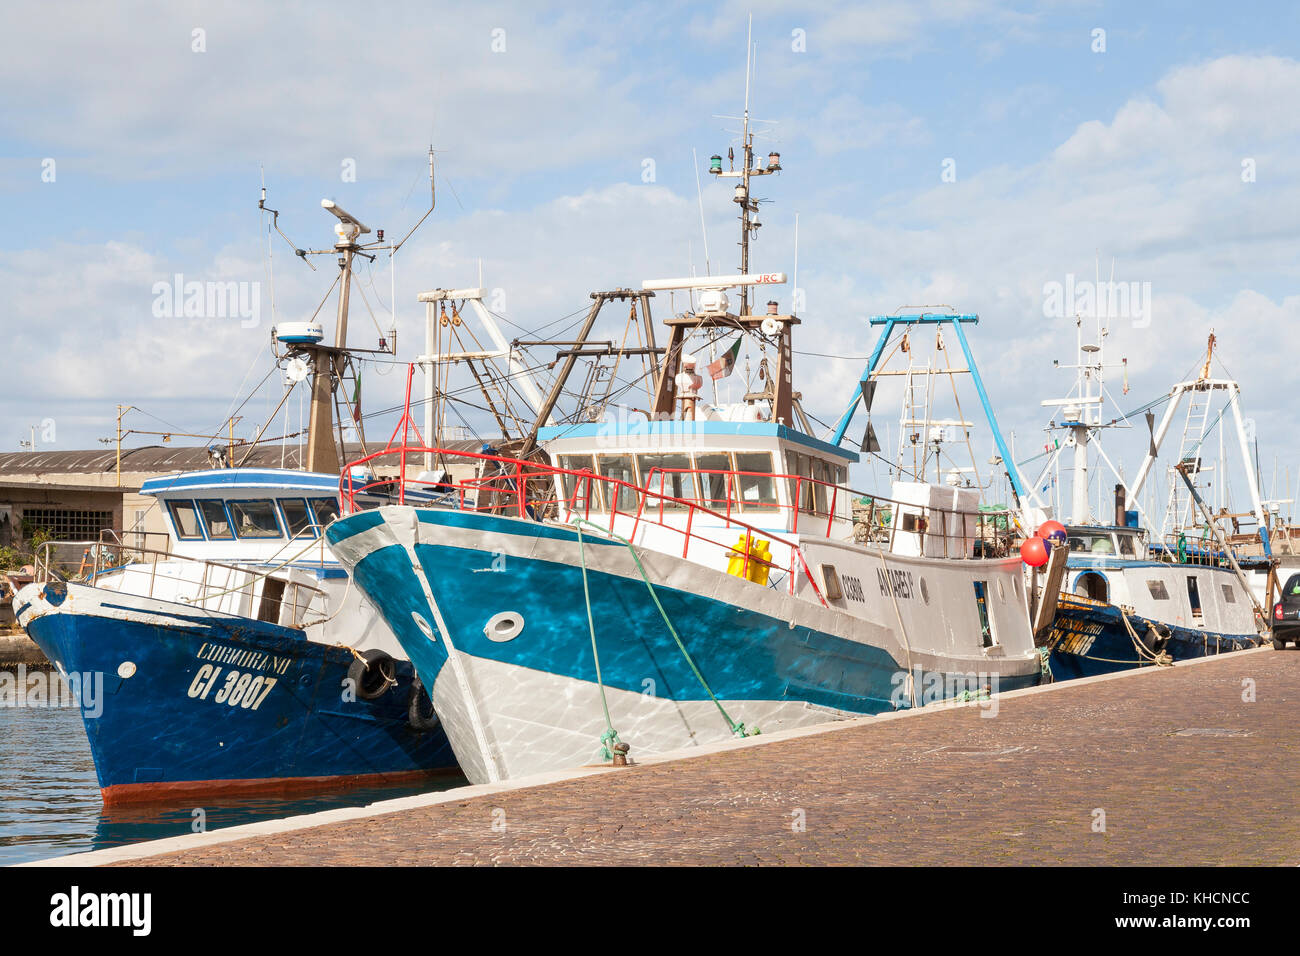 Puertos pesqueros fotografías e imágenes de alta resolución - Alamy